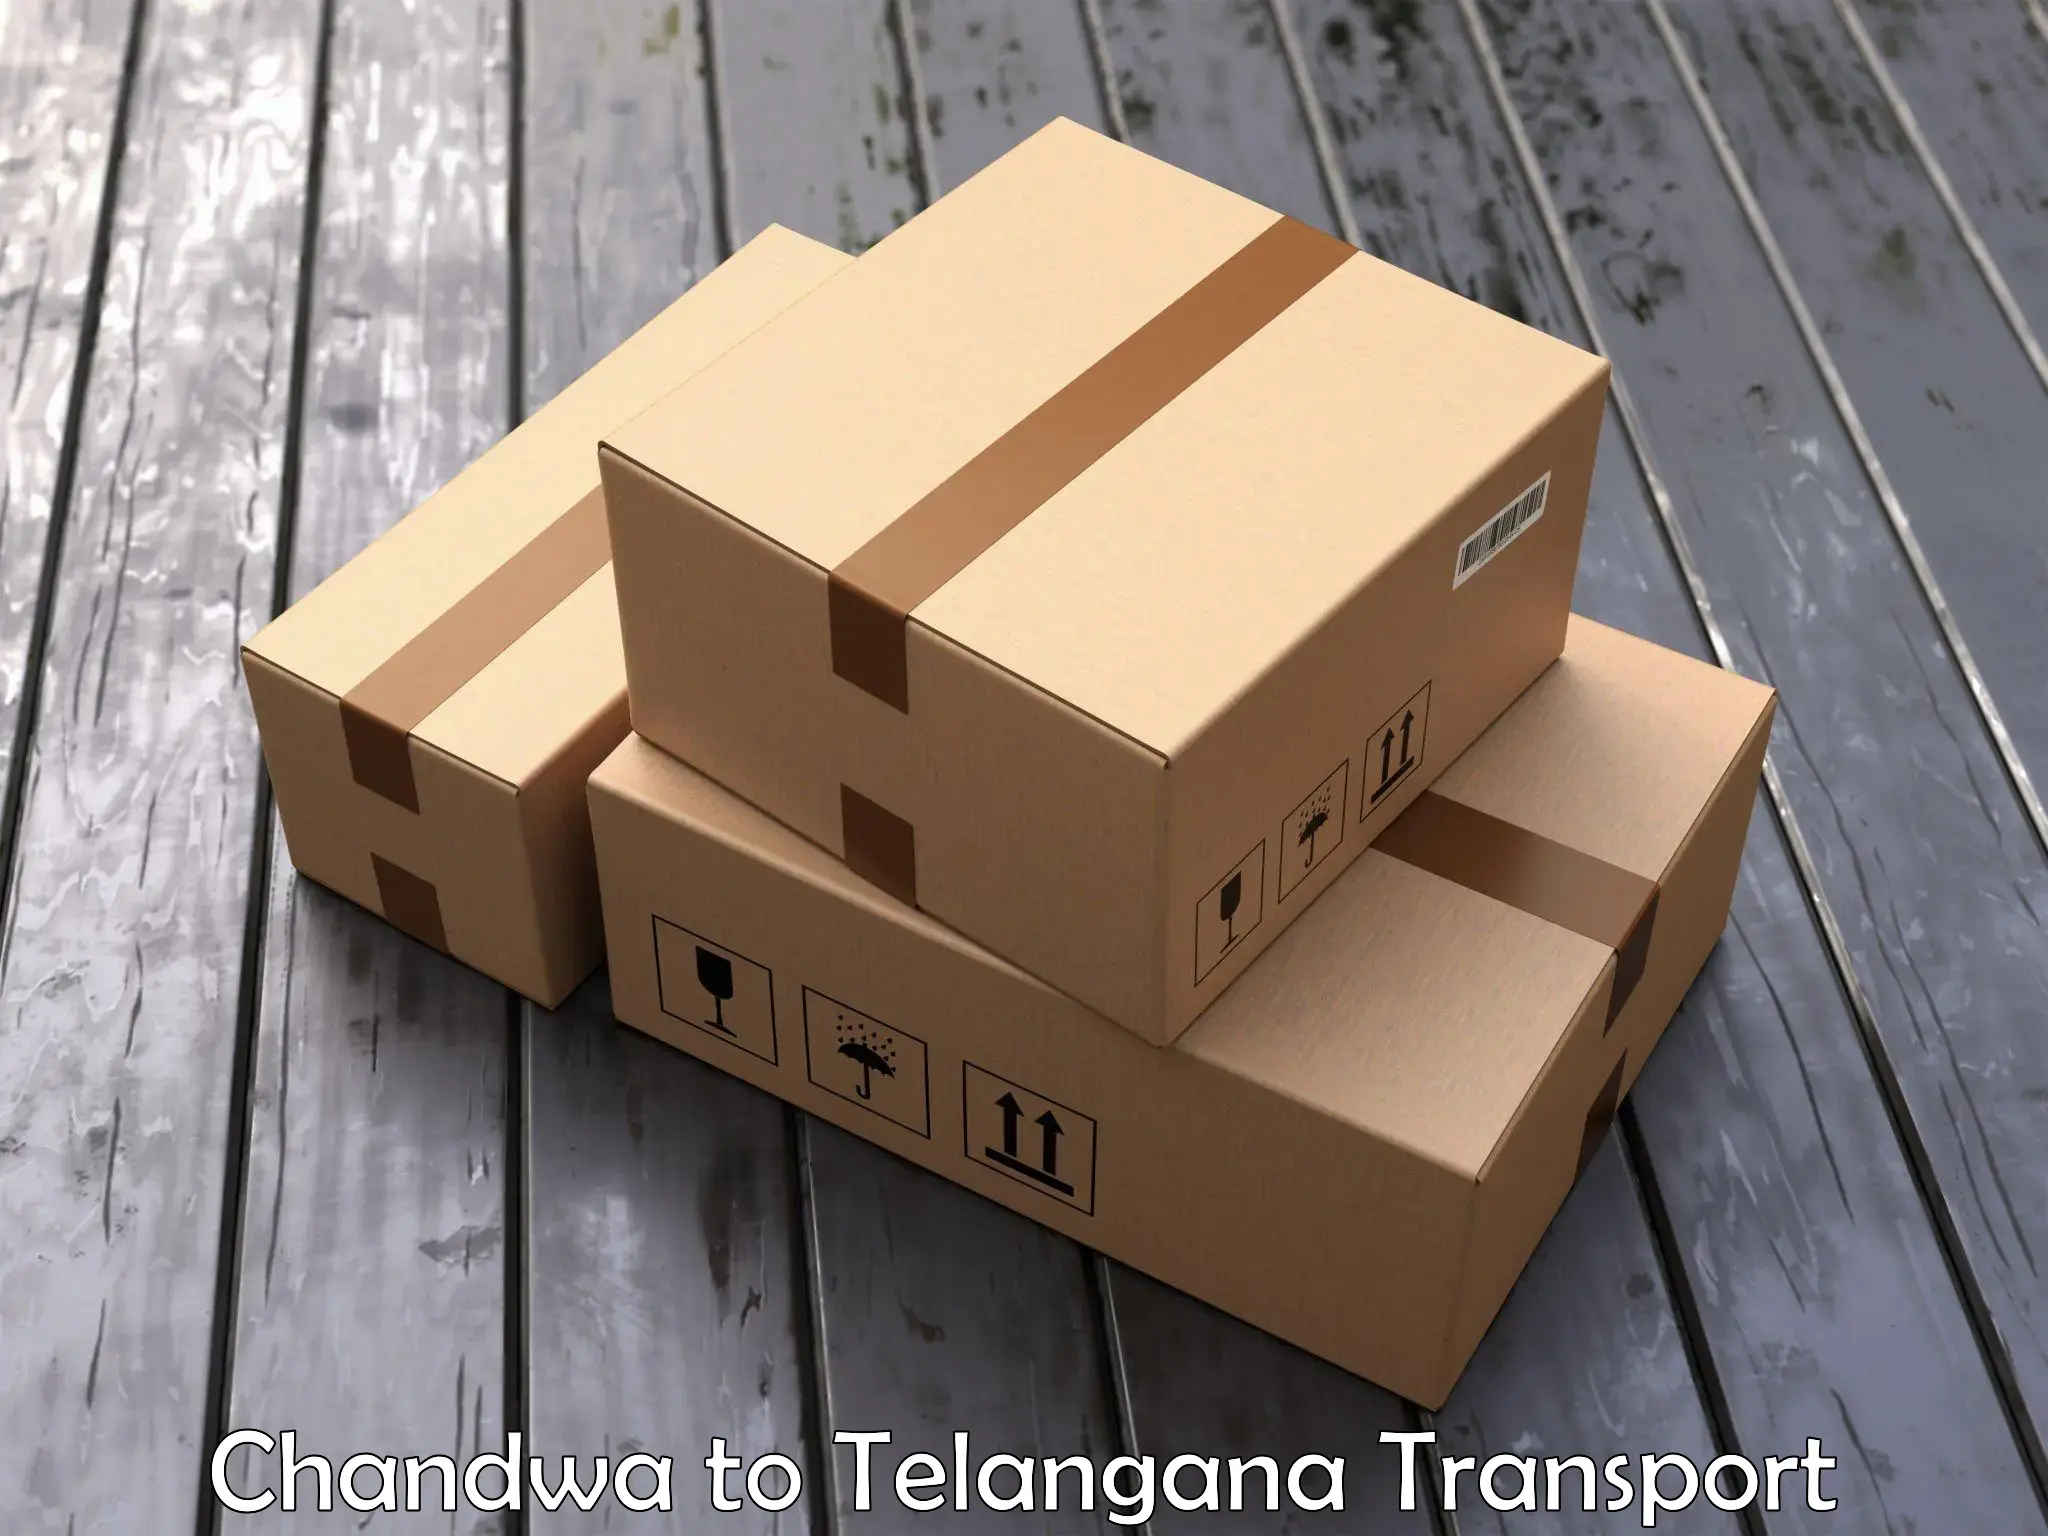 Truck transport companies in India Chandwa to Gangadhara